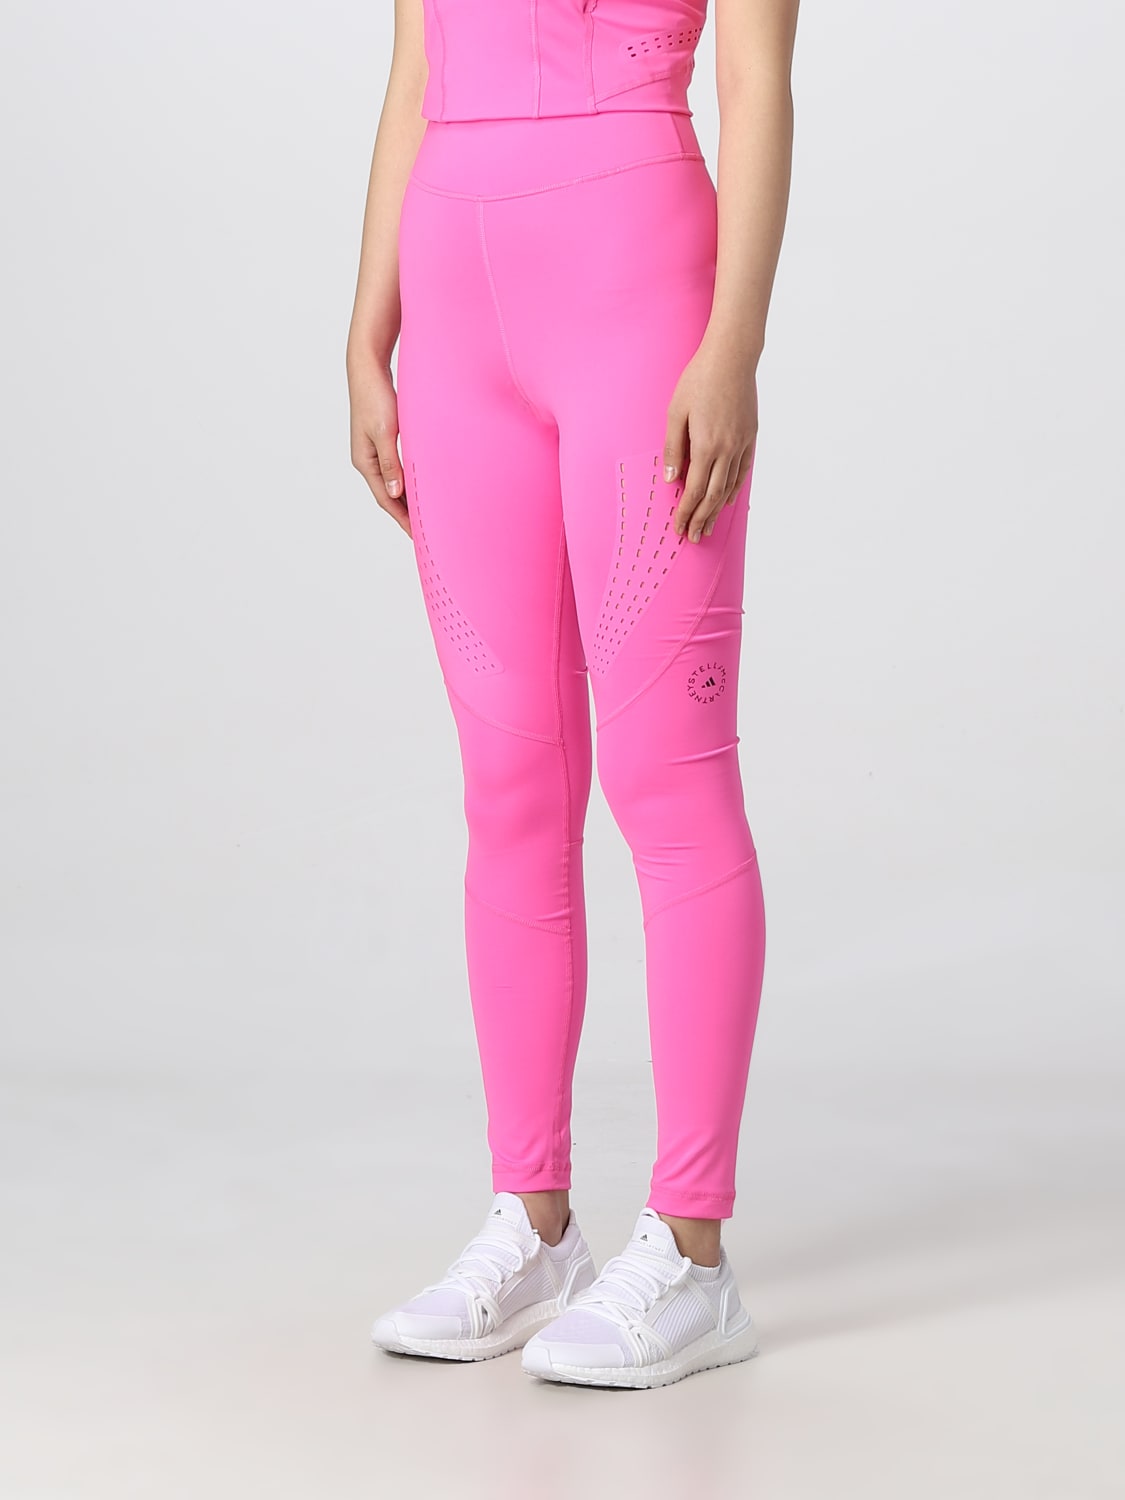 Adidas By Stella Mccartney pants for woman - Pink | Adidas By Stella Mccartney pants HS1735 GIGLIO.COM